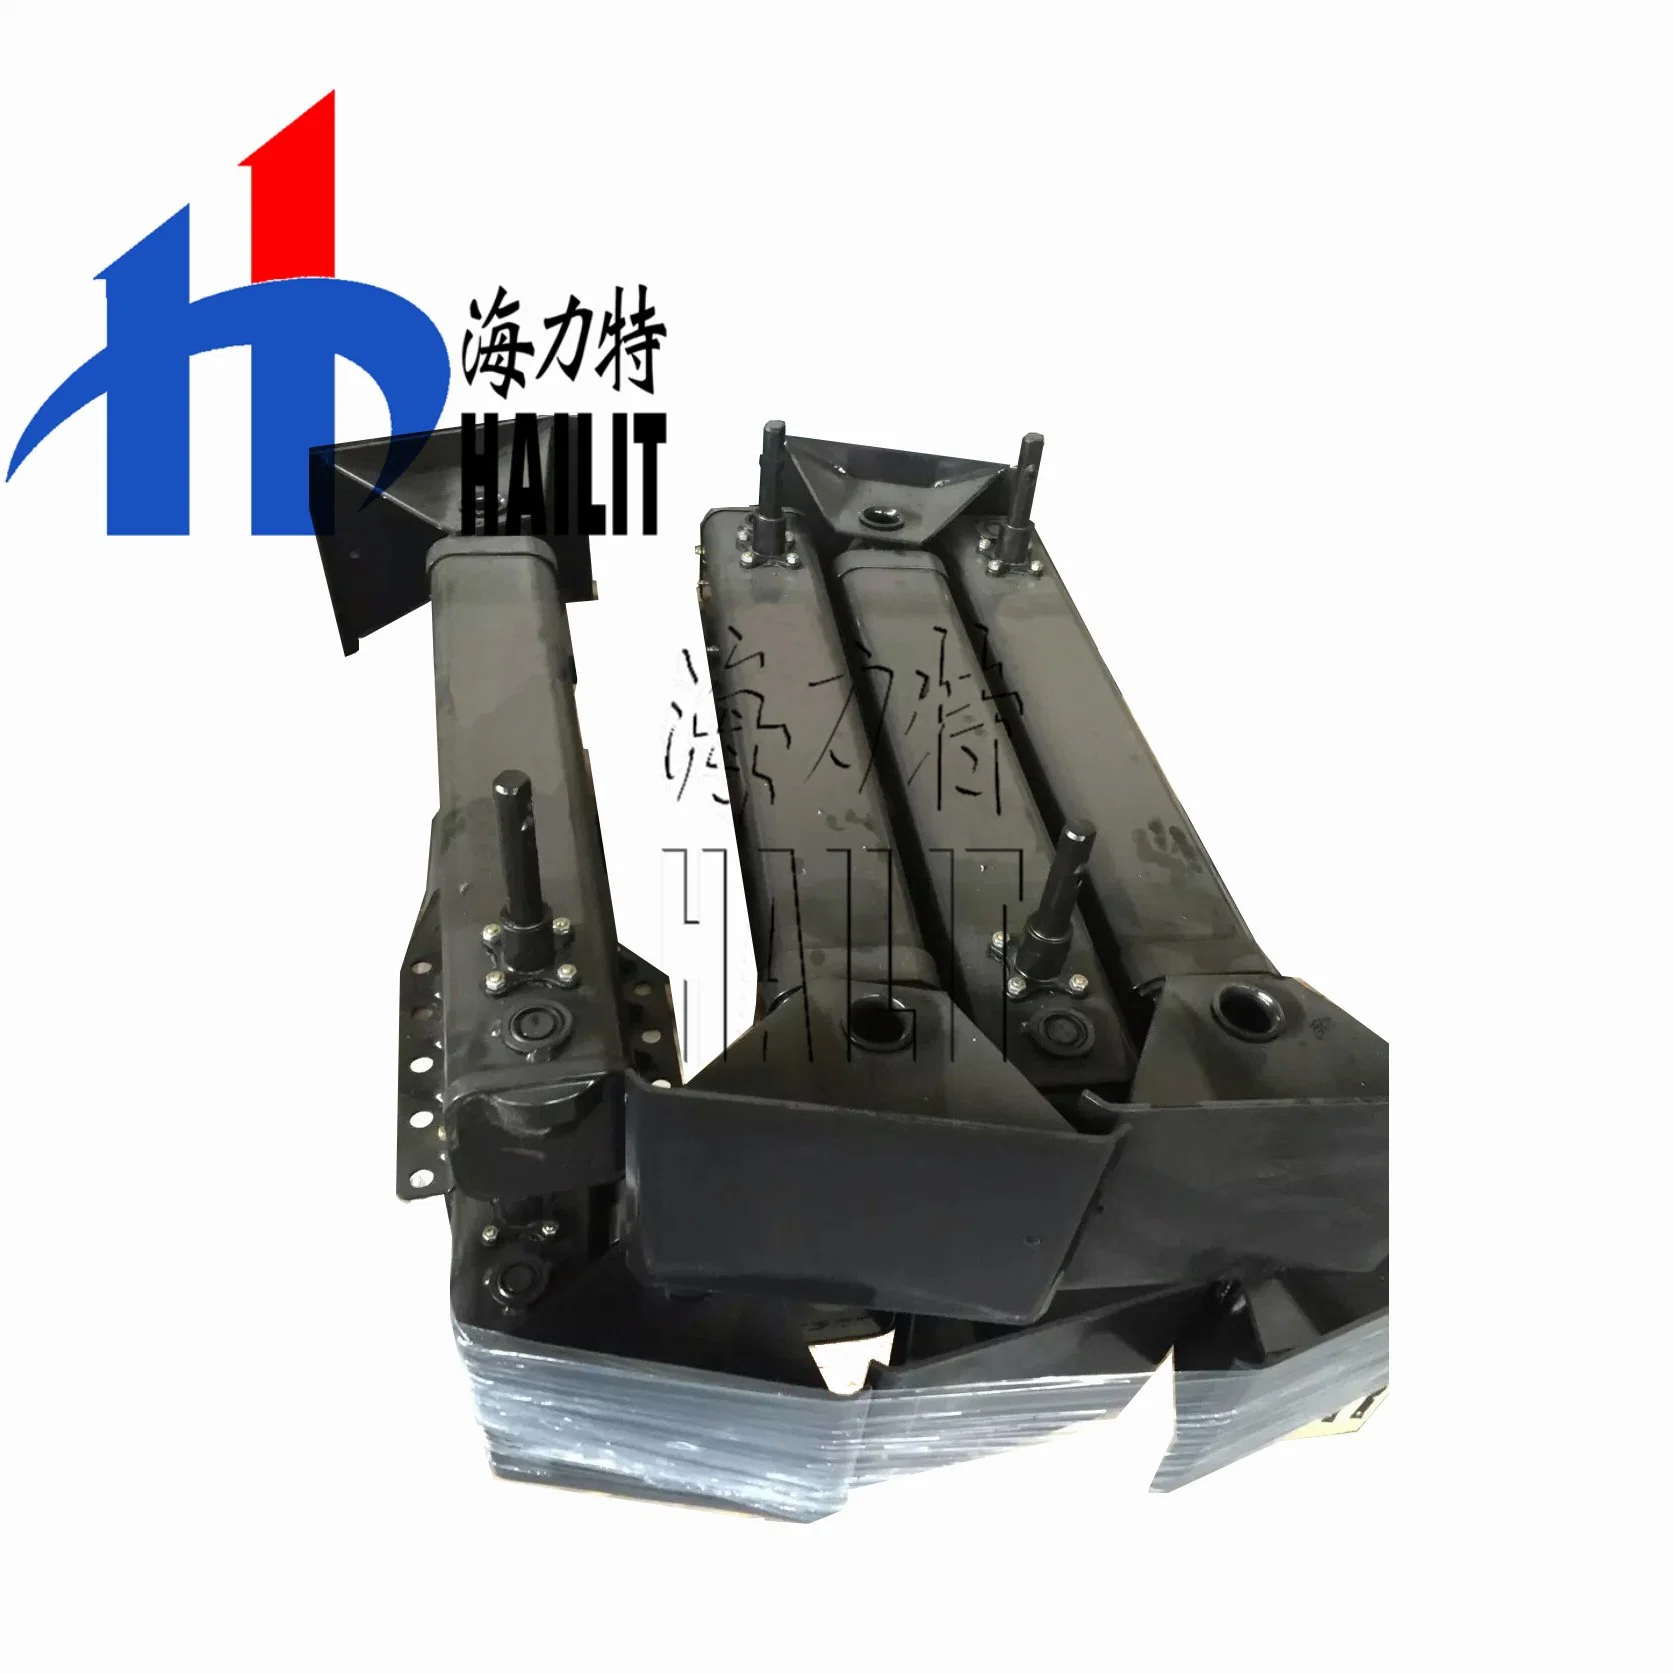 Landing Gear Hlt Trailer Accessory Different Tonnage In-built Separate Handle Landing Legs for Sale (05)